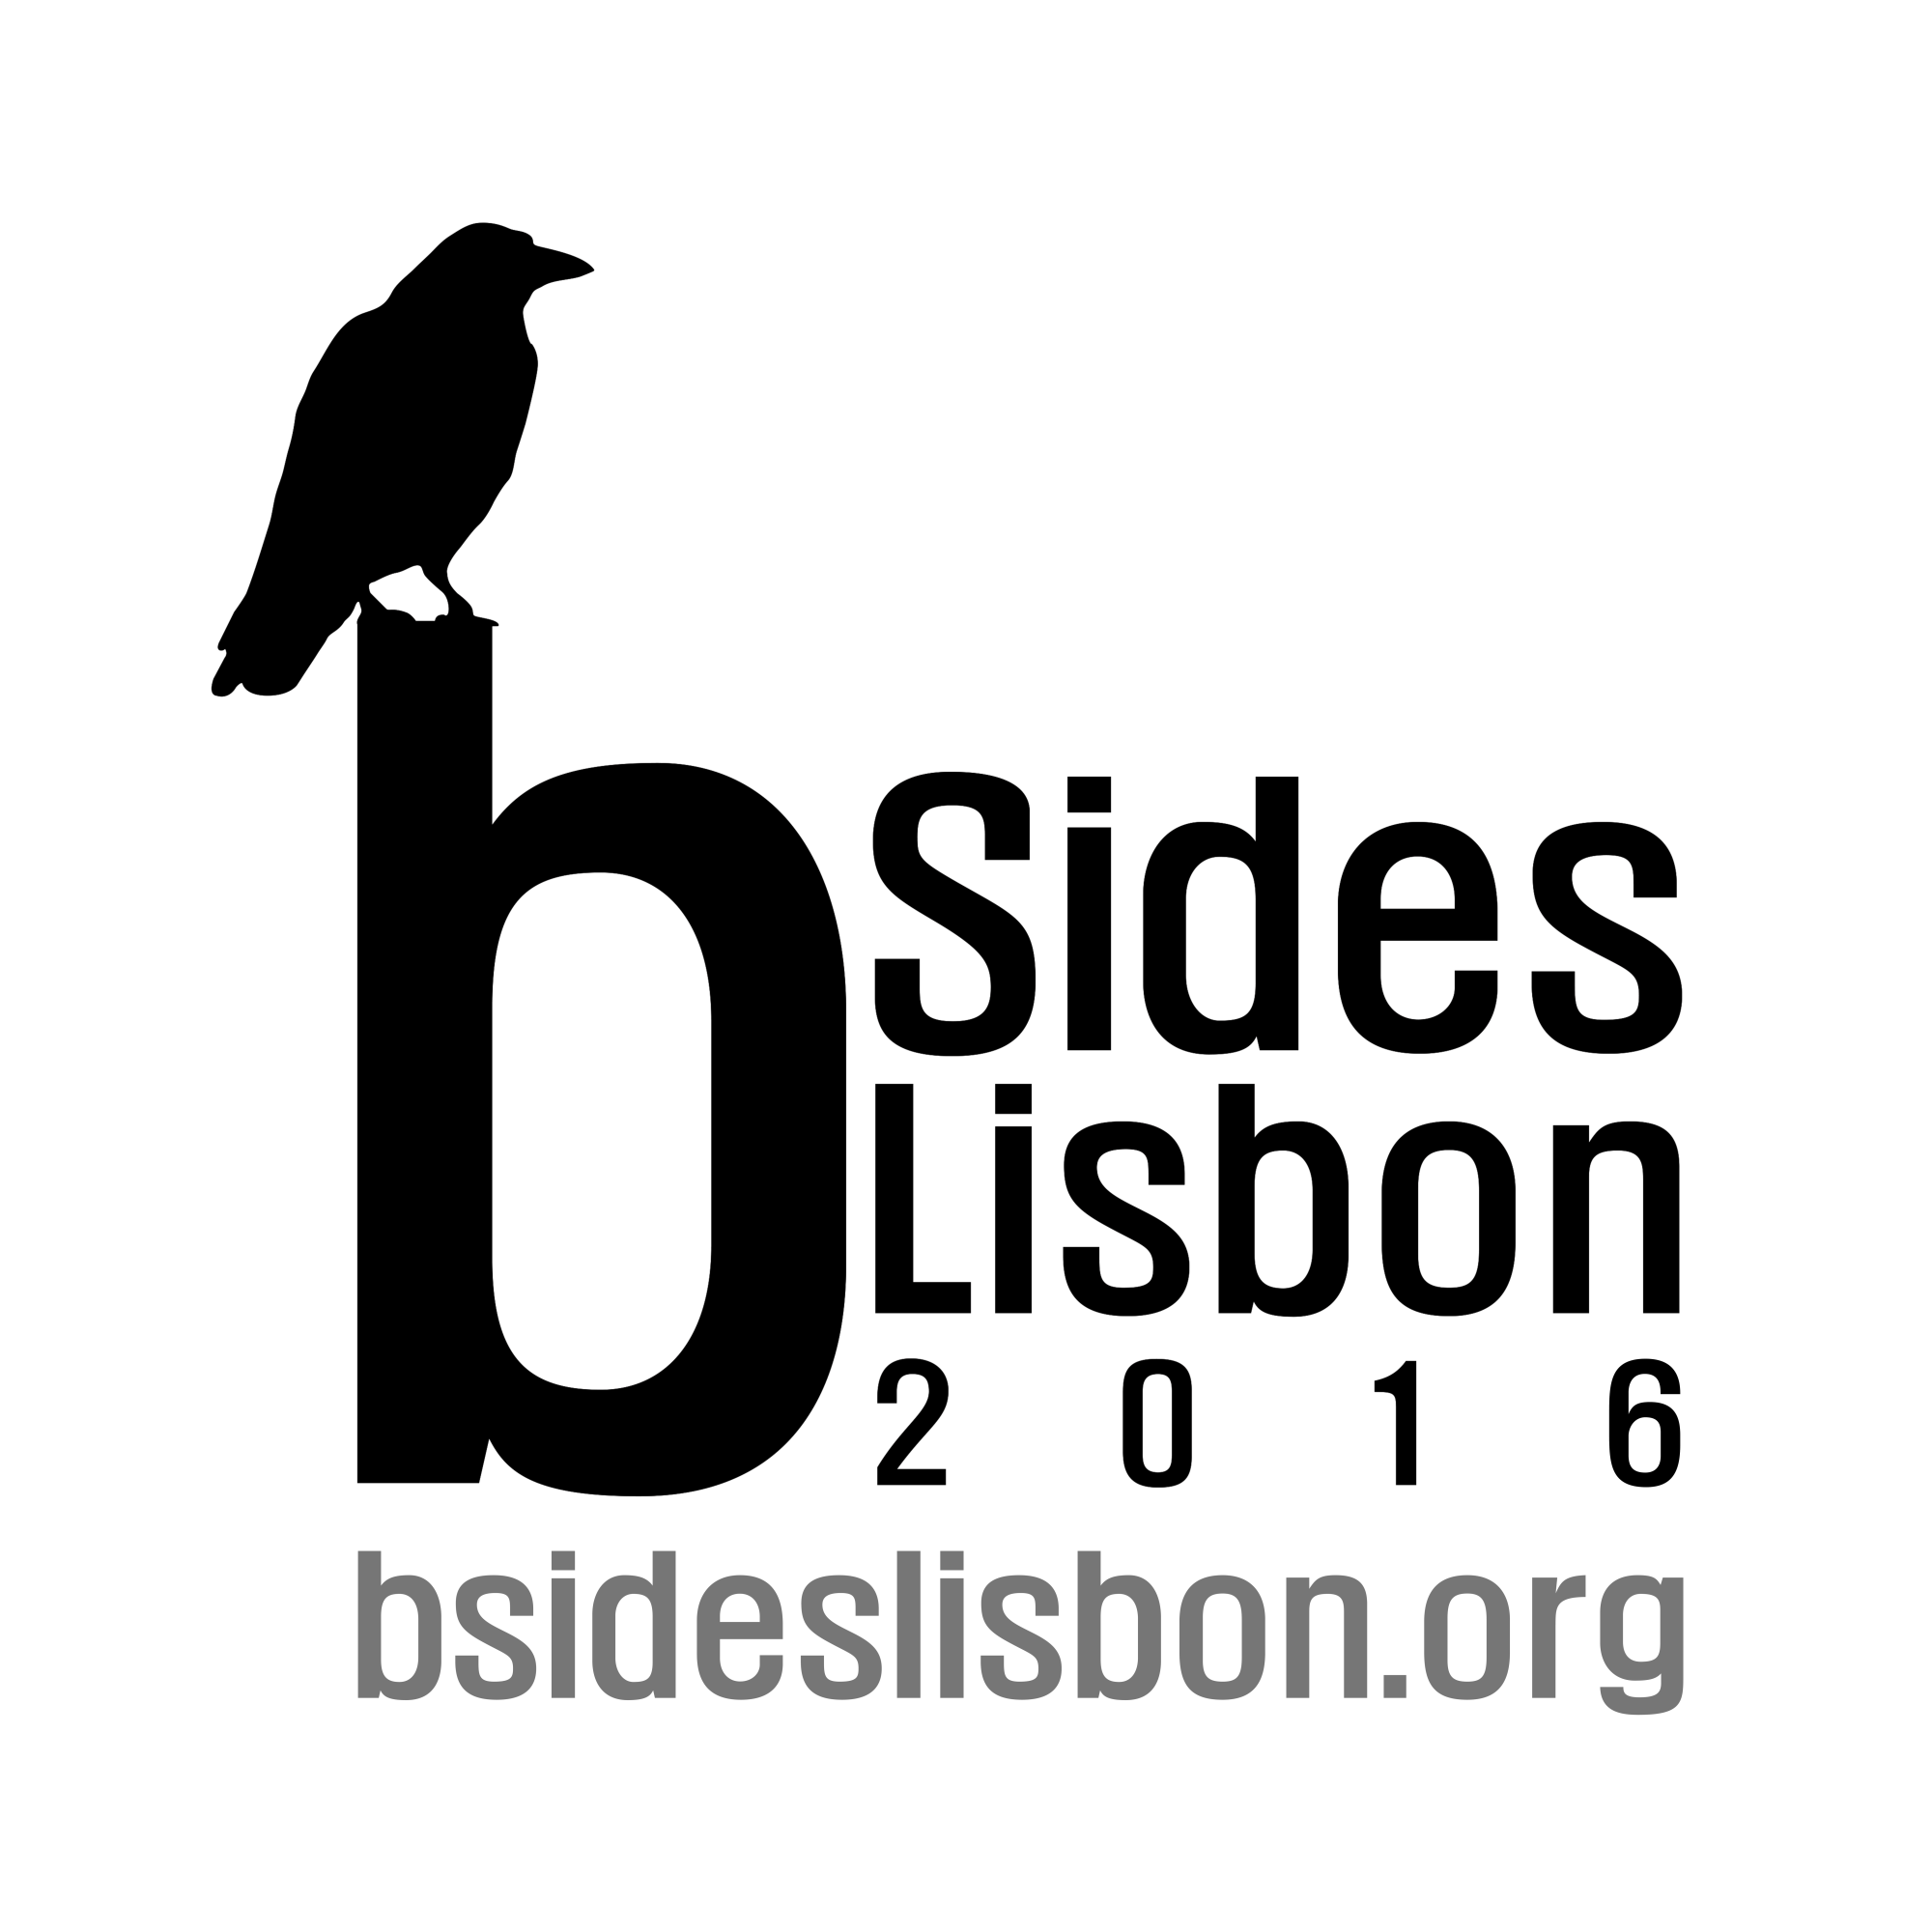 BSides Lisbon Logo